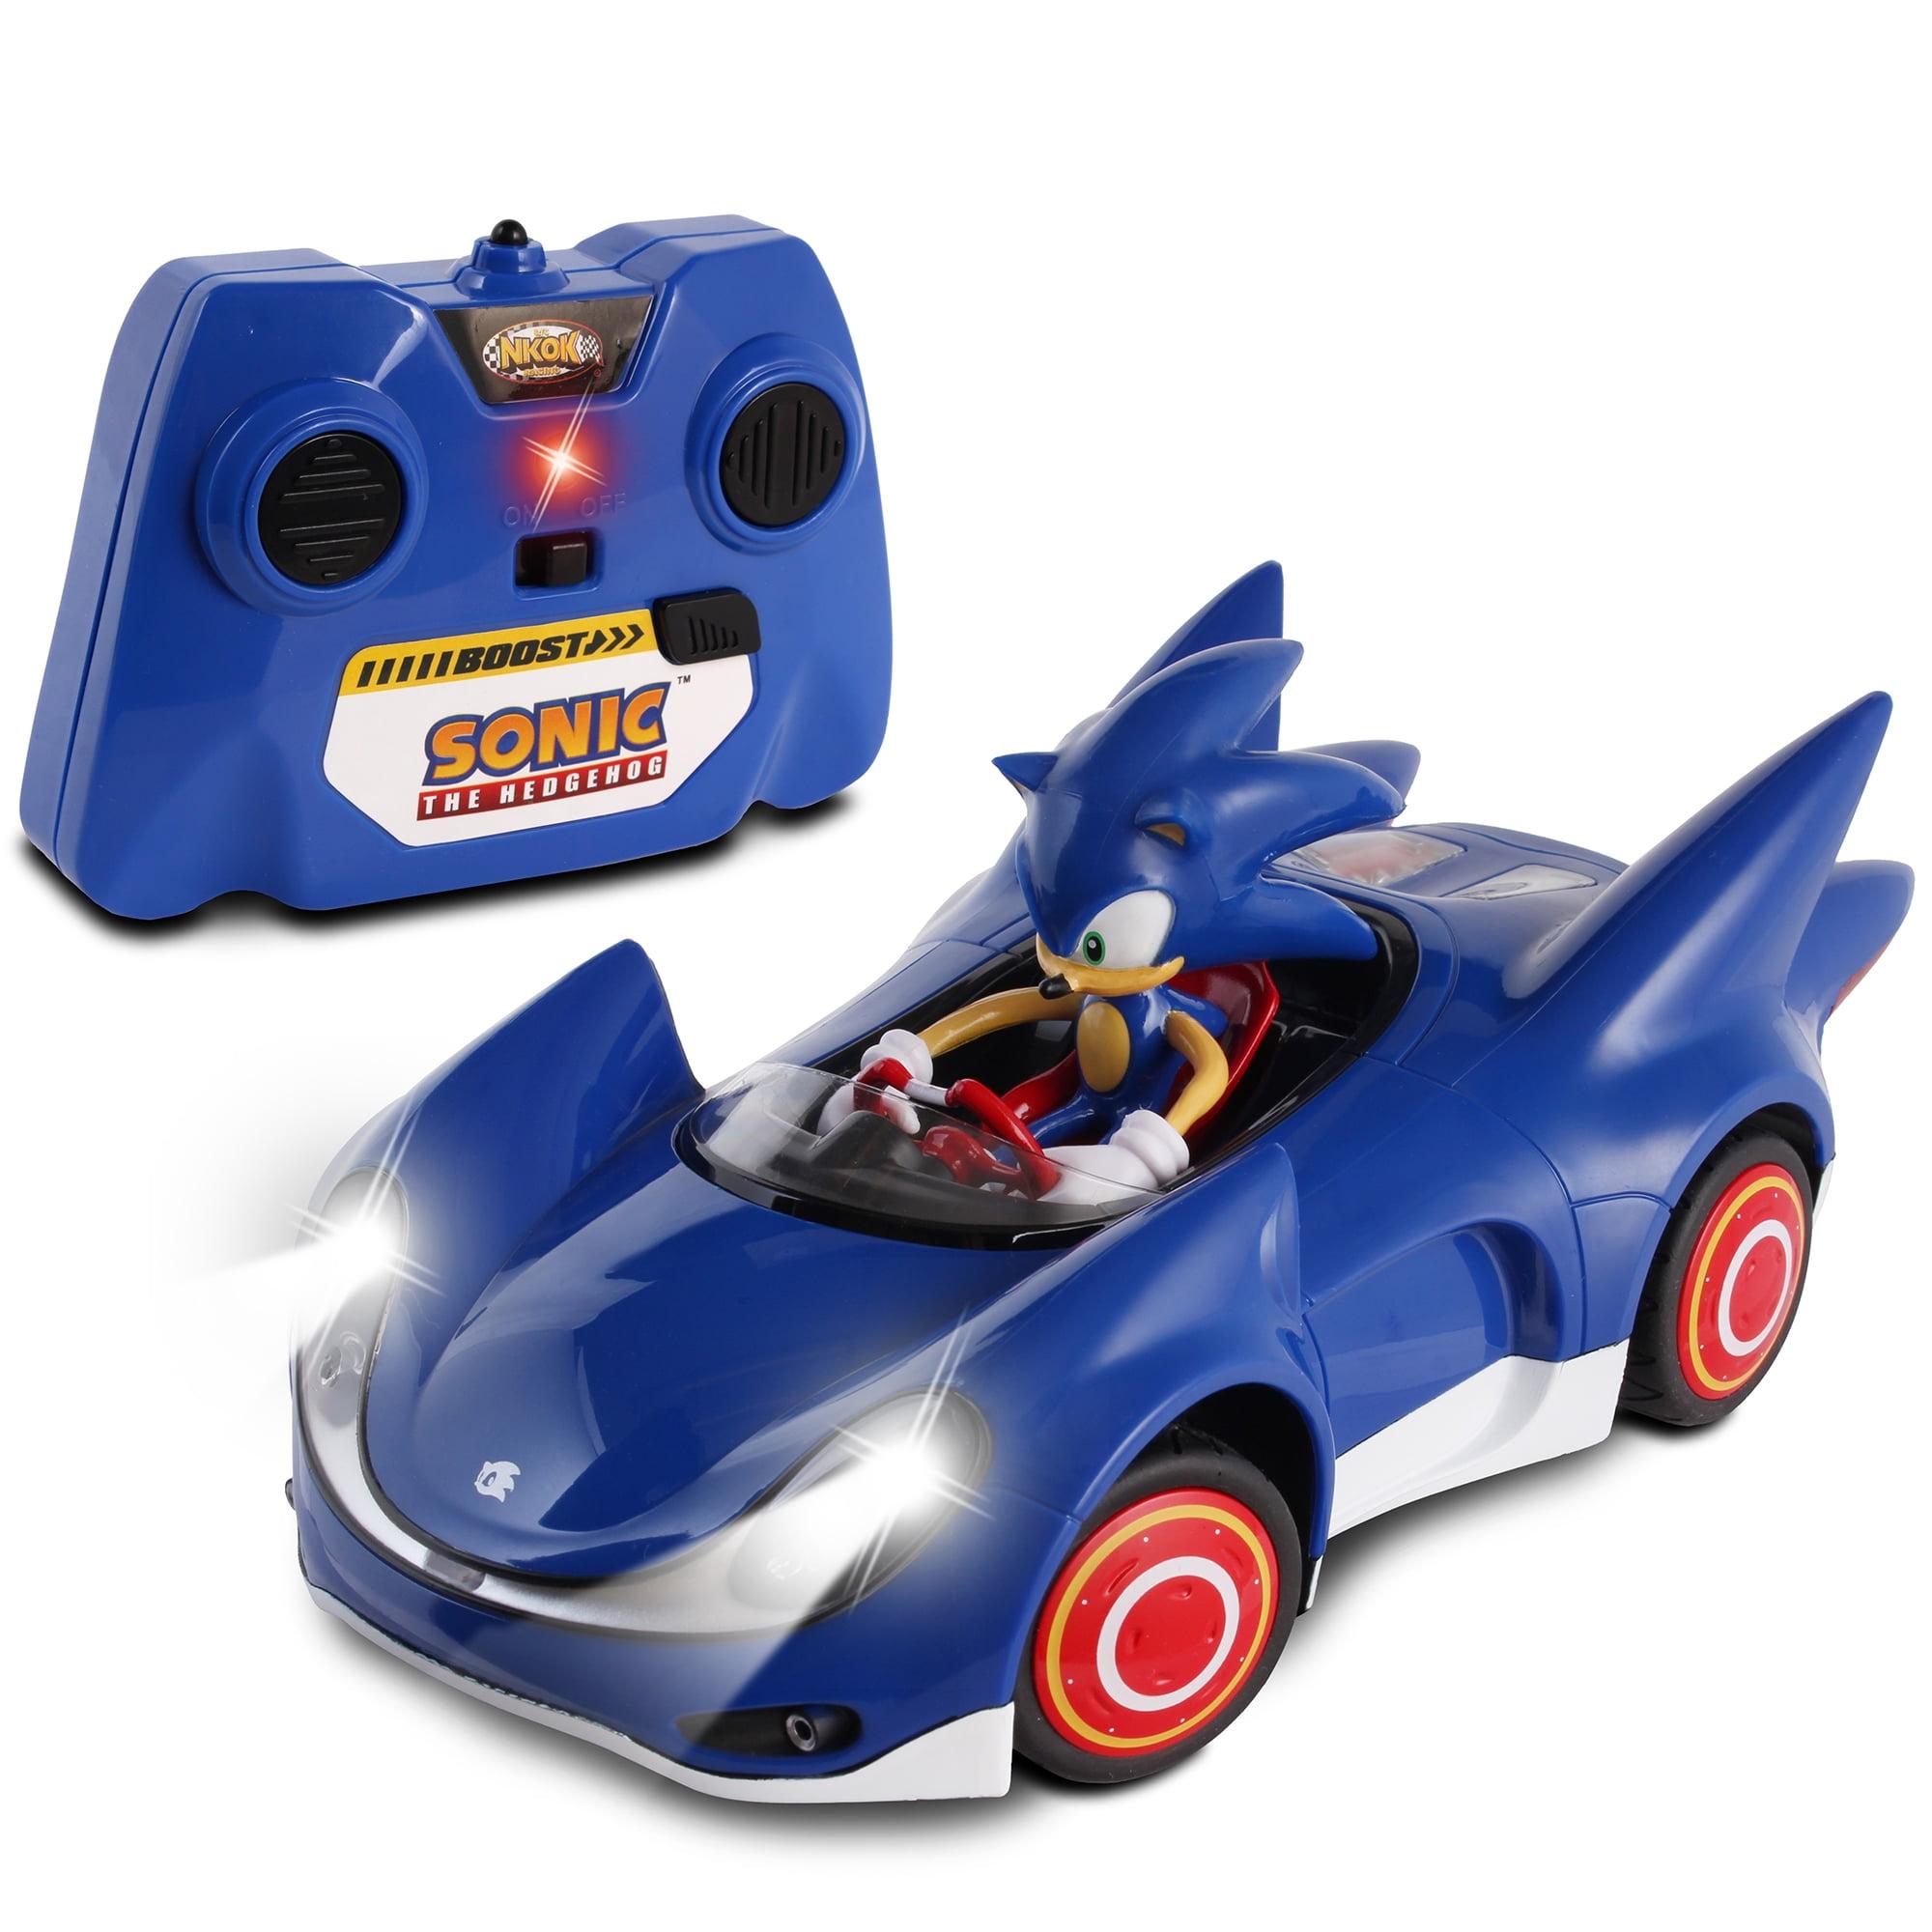 Sonic Remote Control Toys:  Sonic remote control toys: